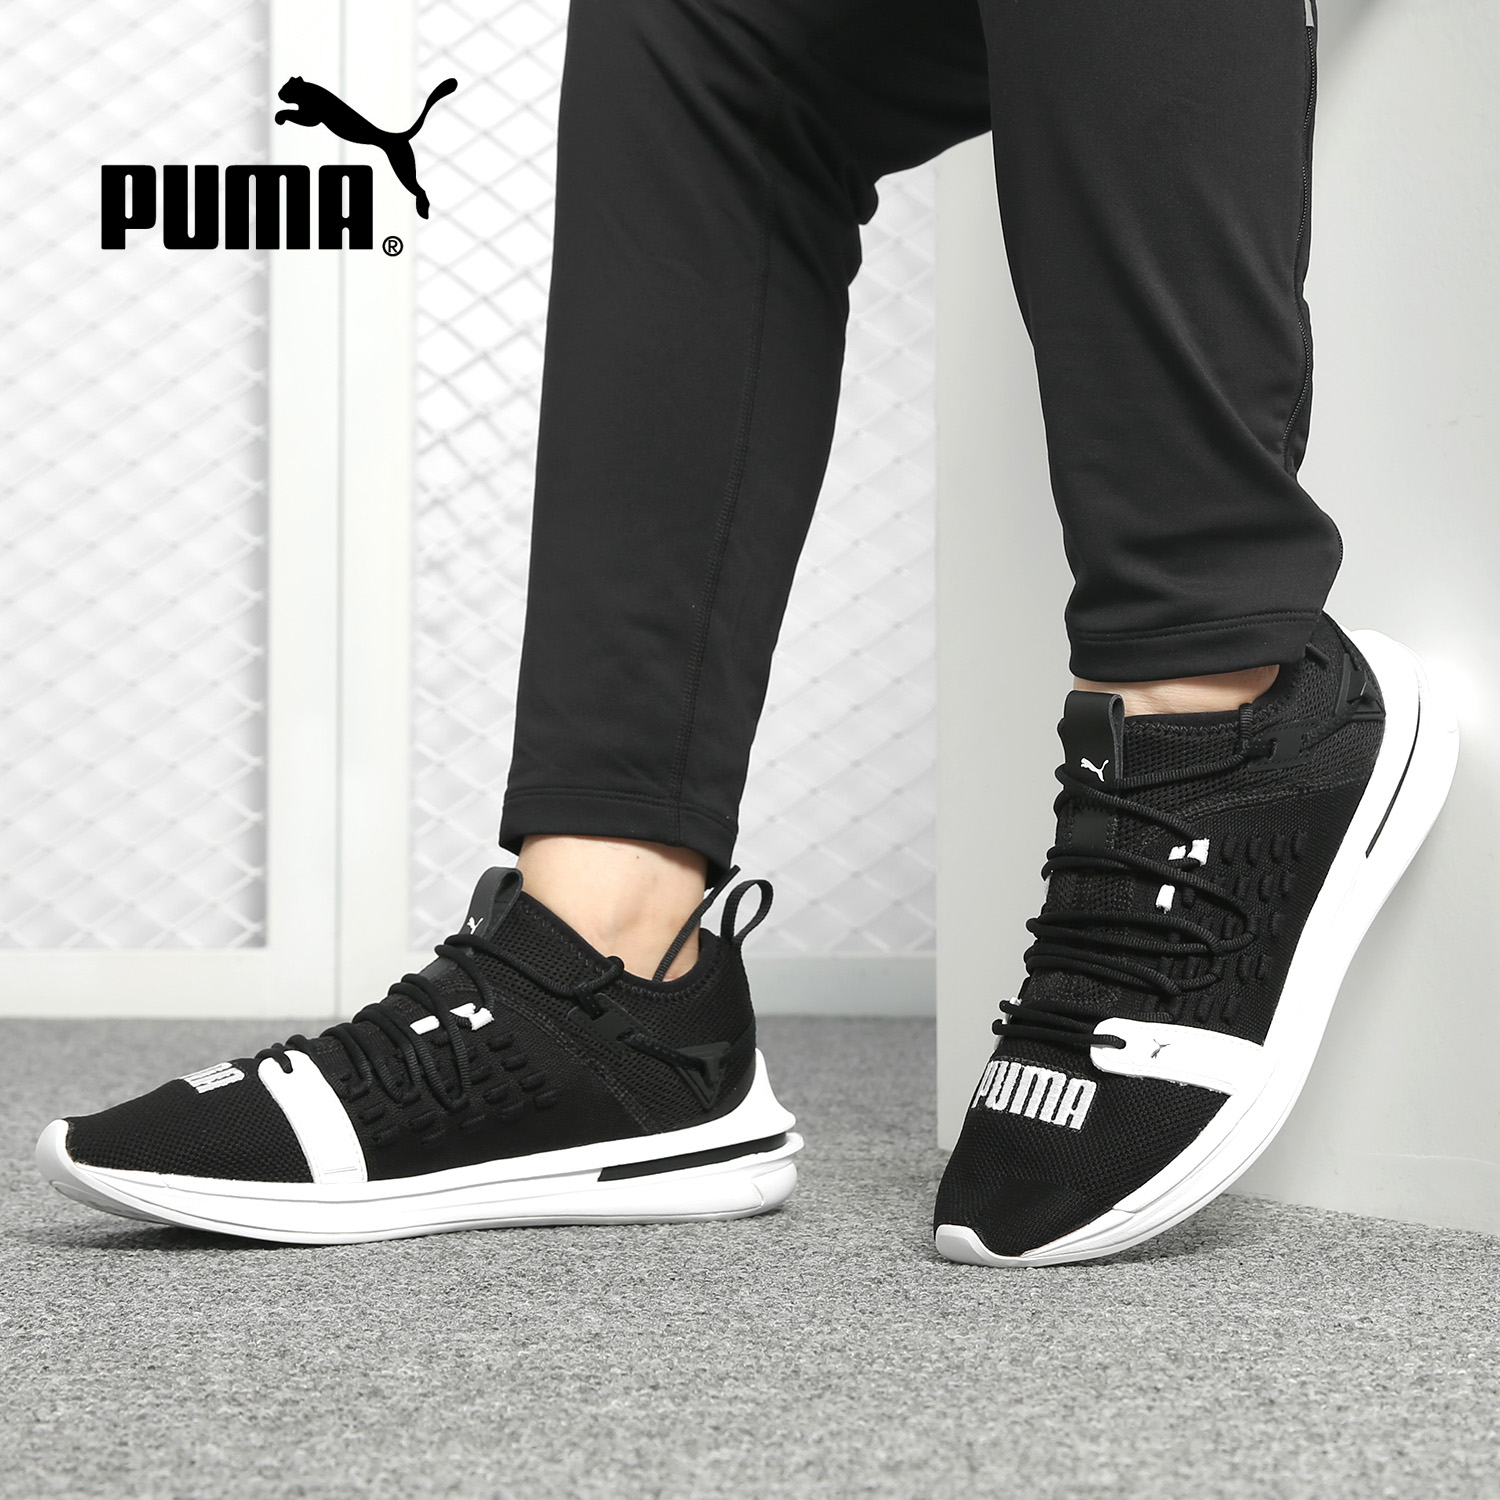 Puma/Puma Genuine IGNITE Limitless FUSEFIT Men's Casual Running Shoe 191123